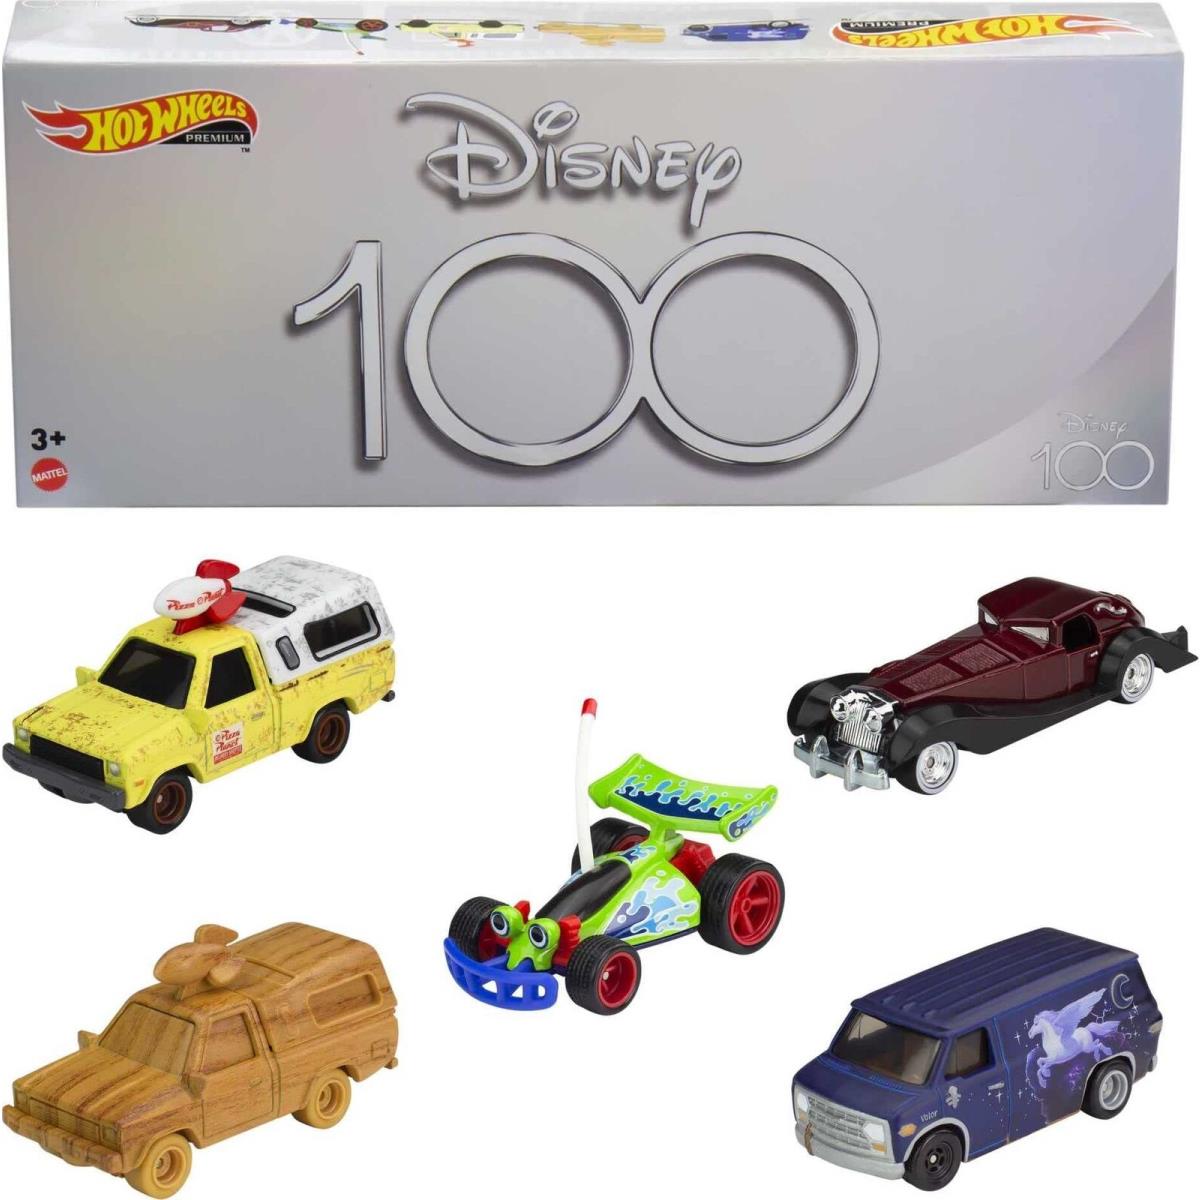 Hot Wheels Disney Cars Bundle Set of 5 Premium Disney and Pixar 1:64 Scale Toy